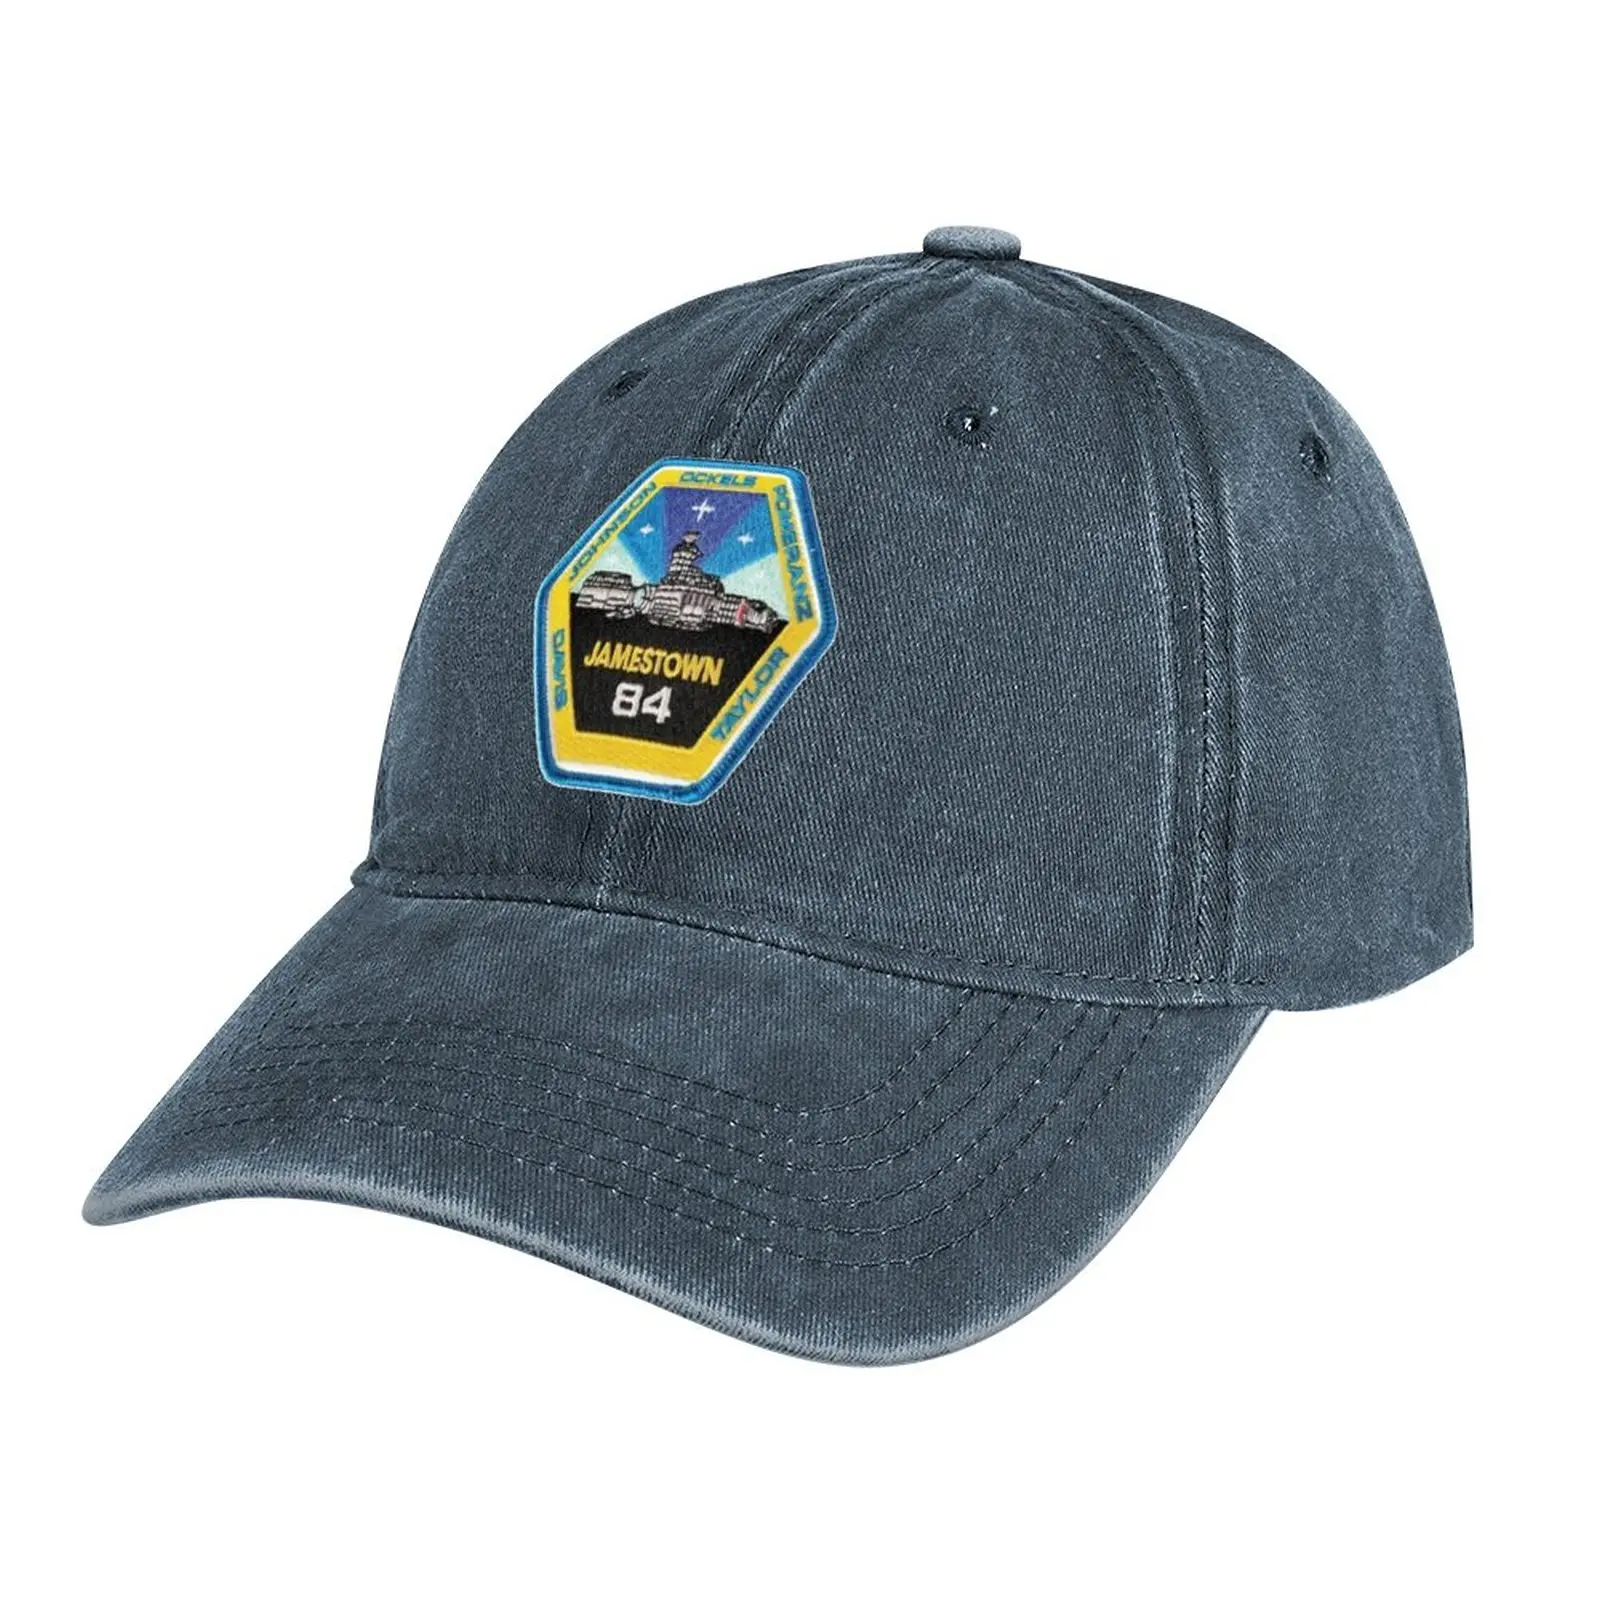 https://ae01.alicdn.com/kf/S708ea81138ec419489f08c6b4631f36fJ/For-all-Mankind-season-2-Mission-84-Jamestown-Cowboy-Hat-funny-hat-hard-hat-Hat-Female.jpg